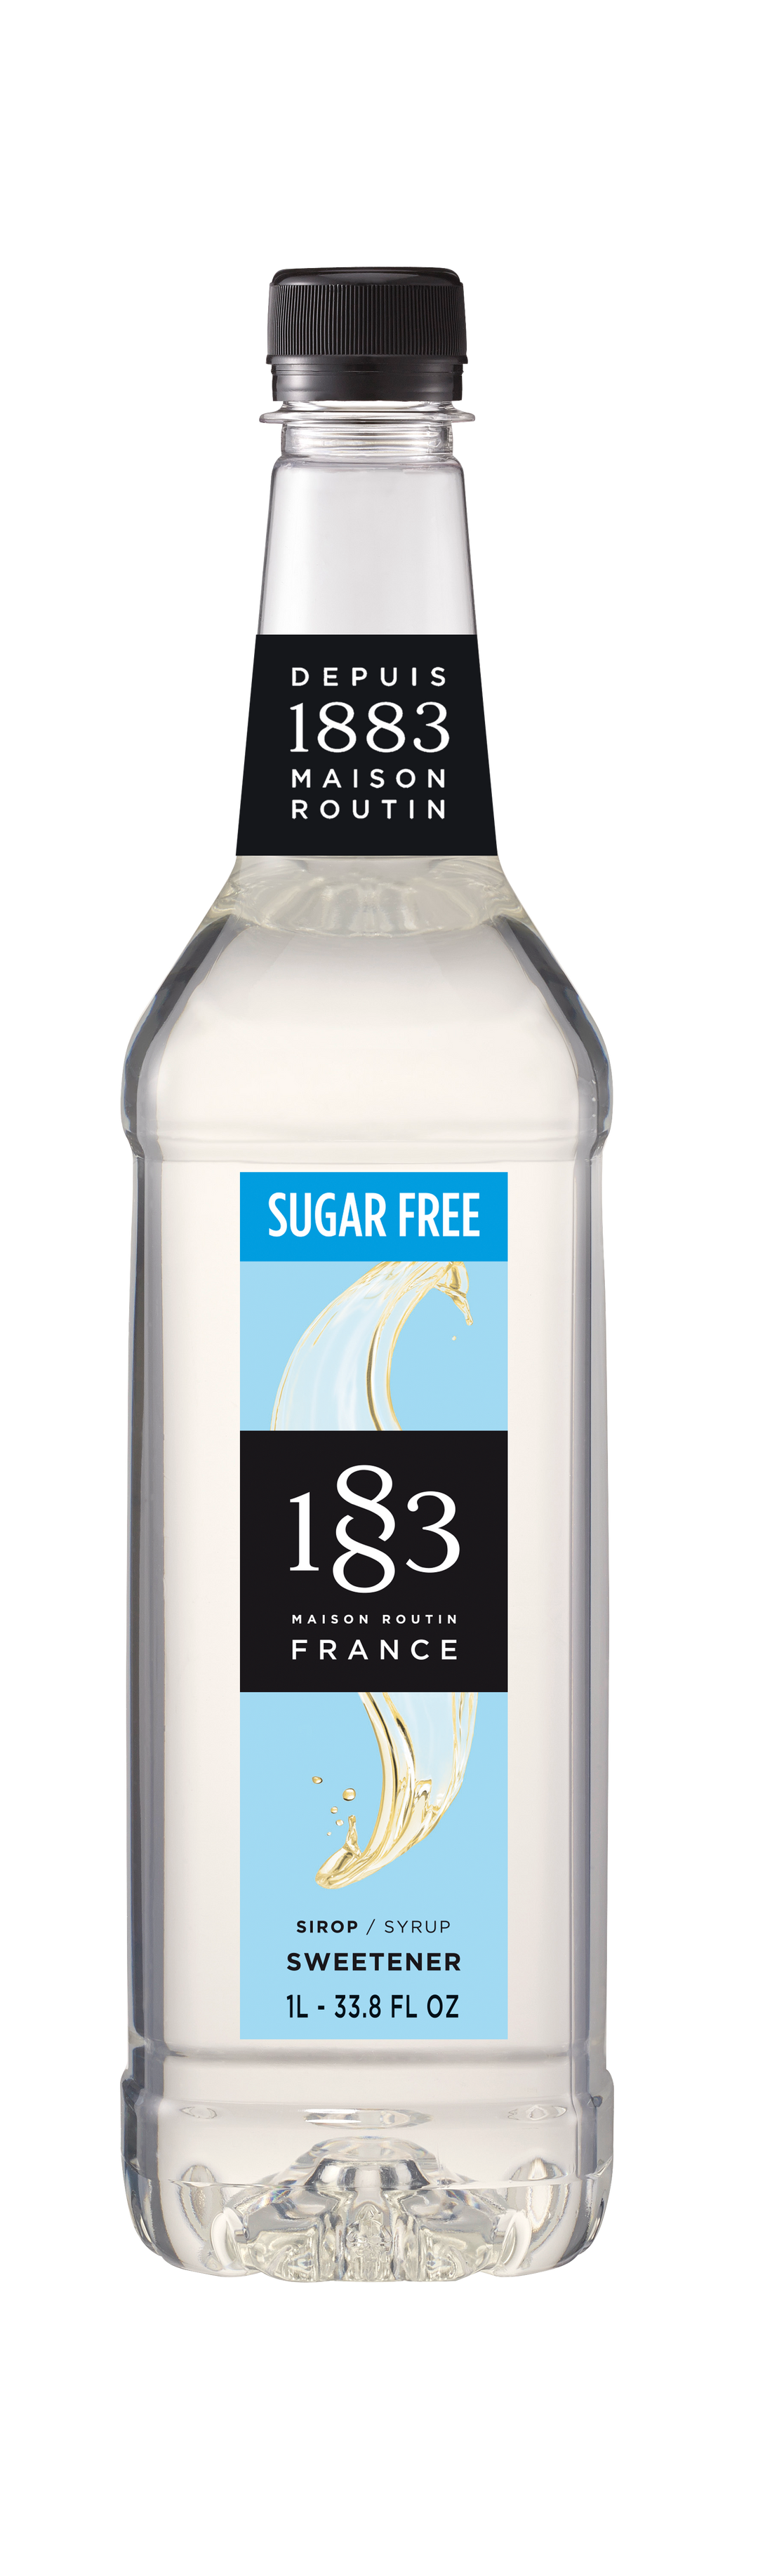 Sweetener PET 1L Syrup - 1883